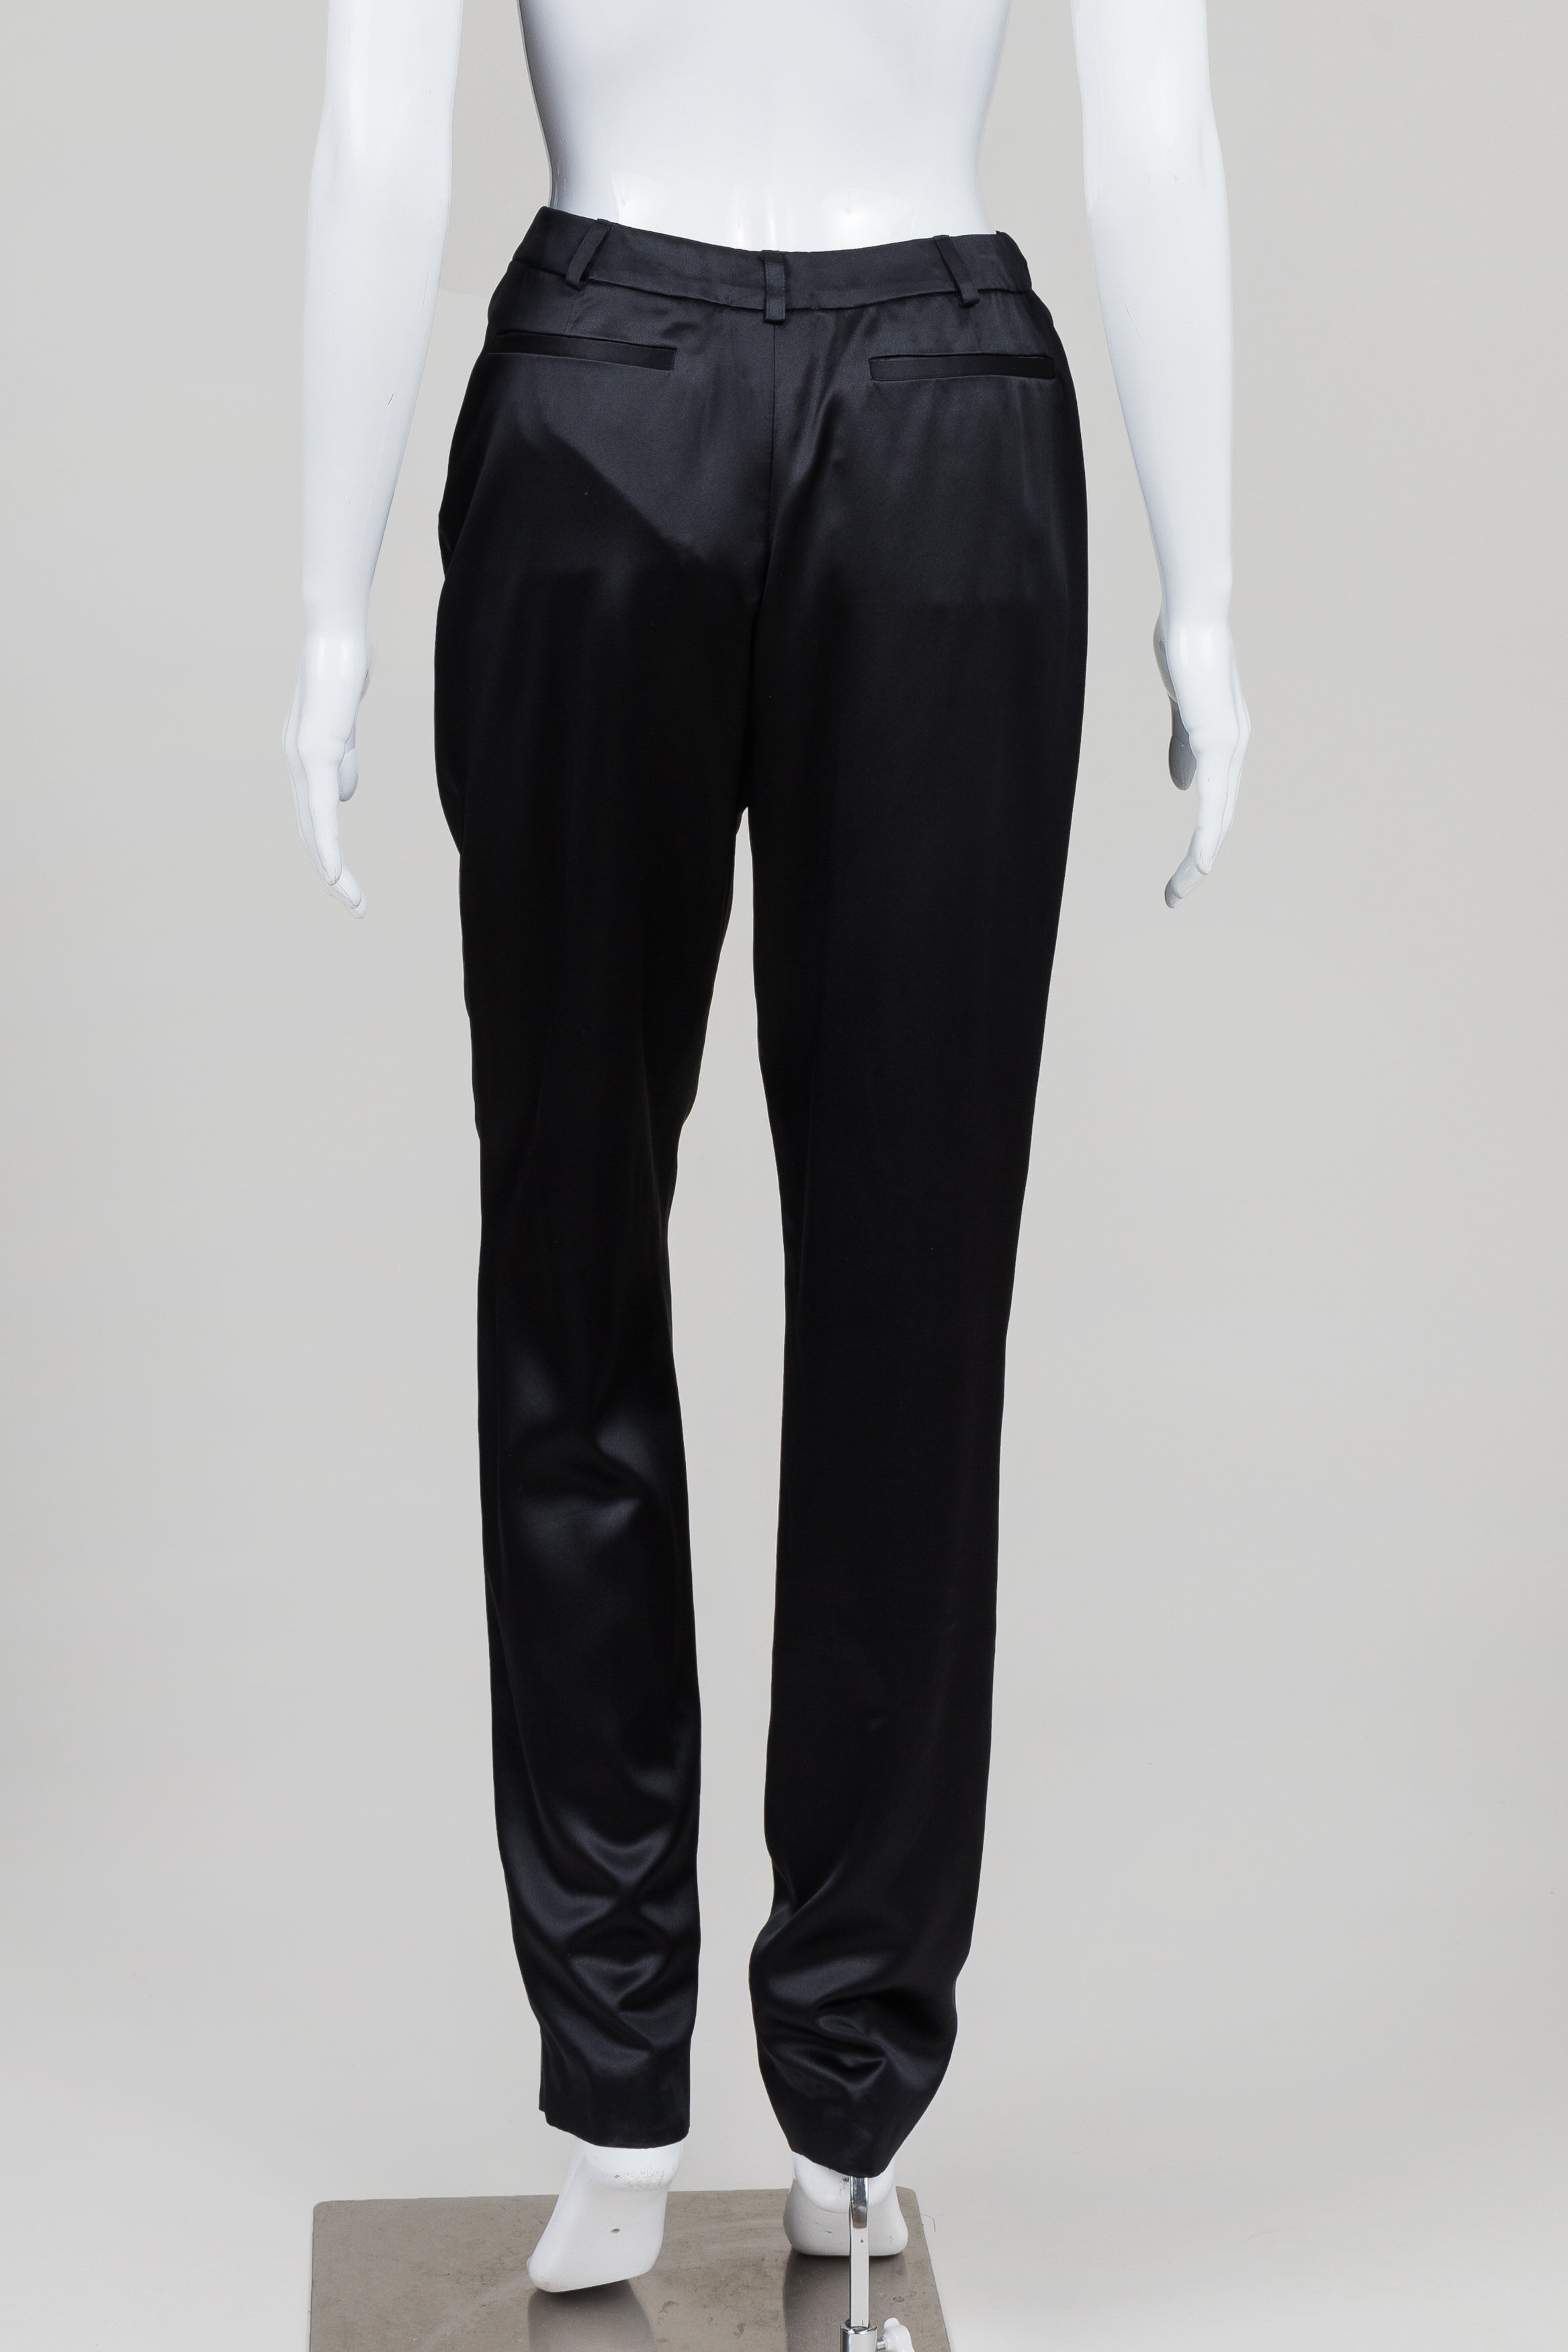 DKNY Black Silk Satin Trousers (6)